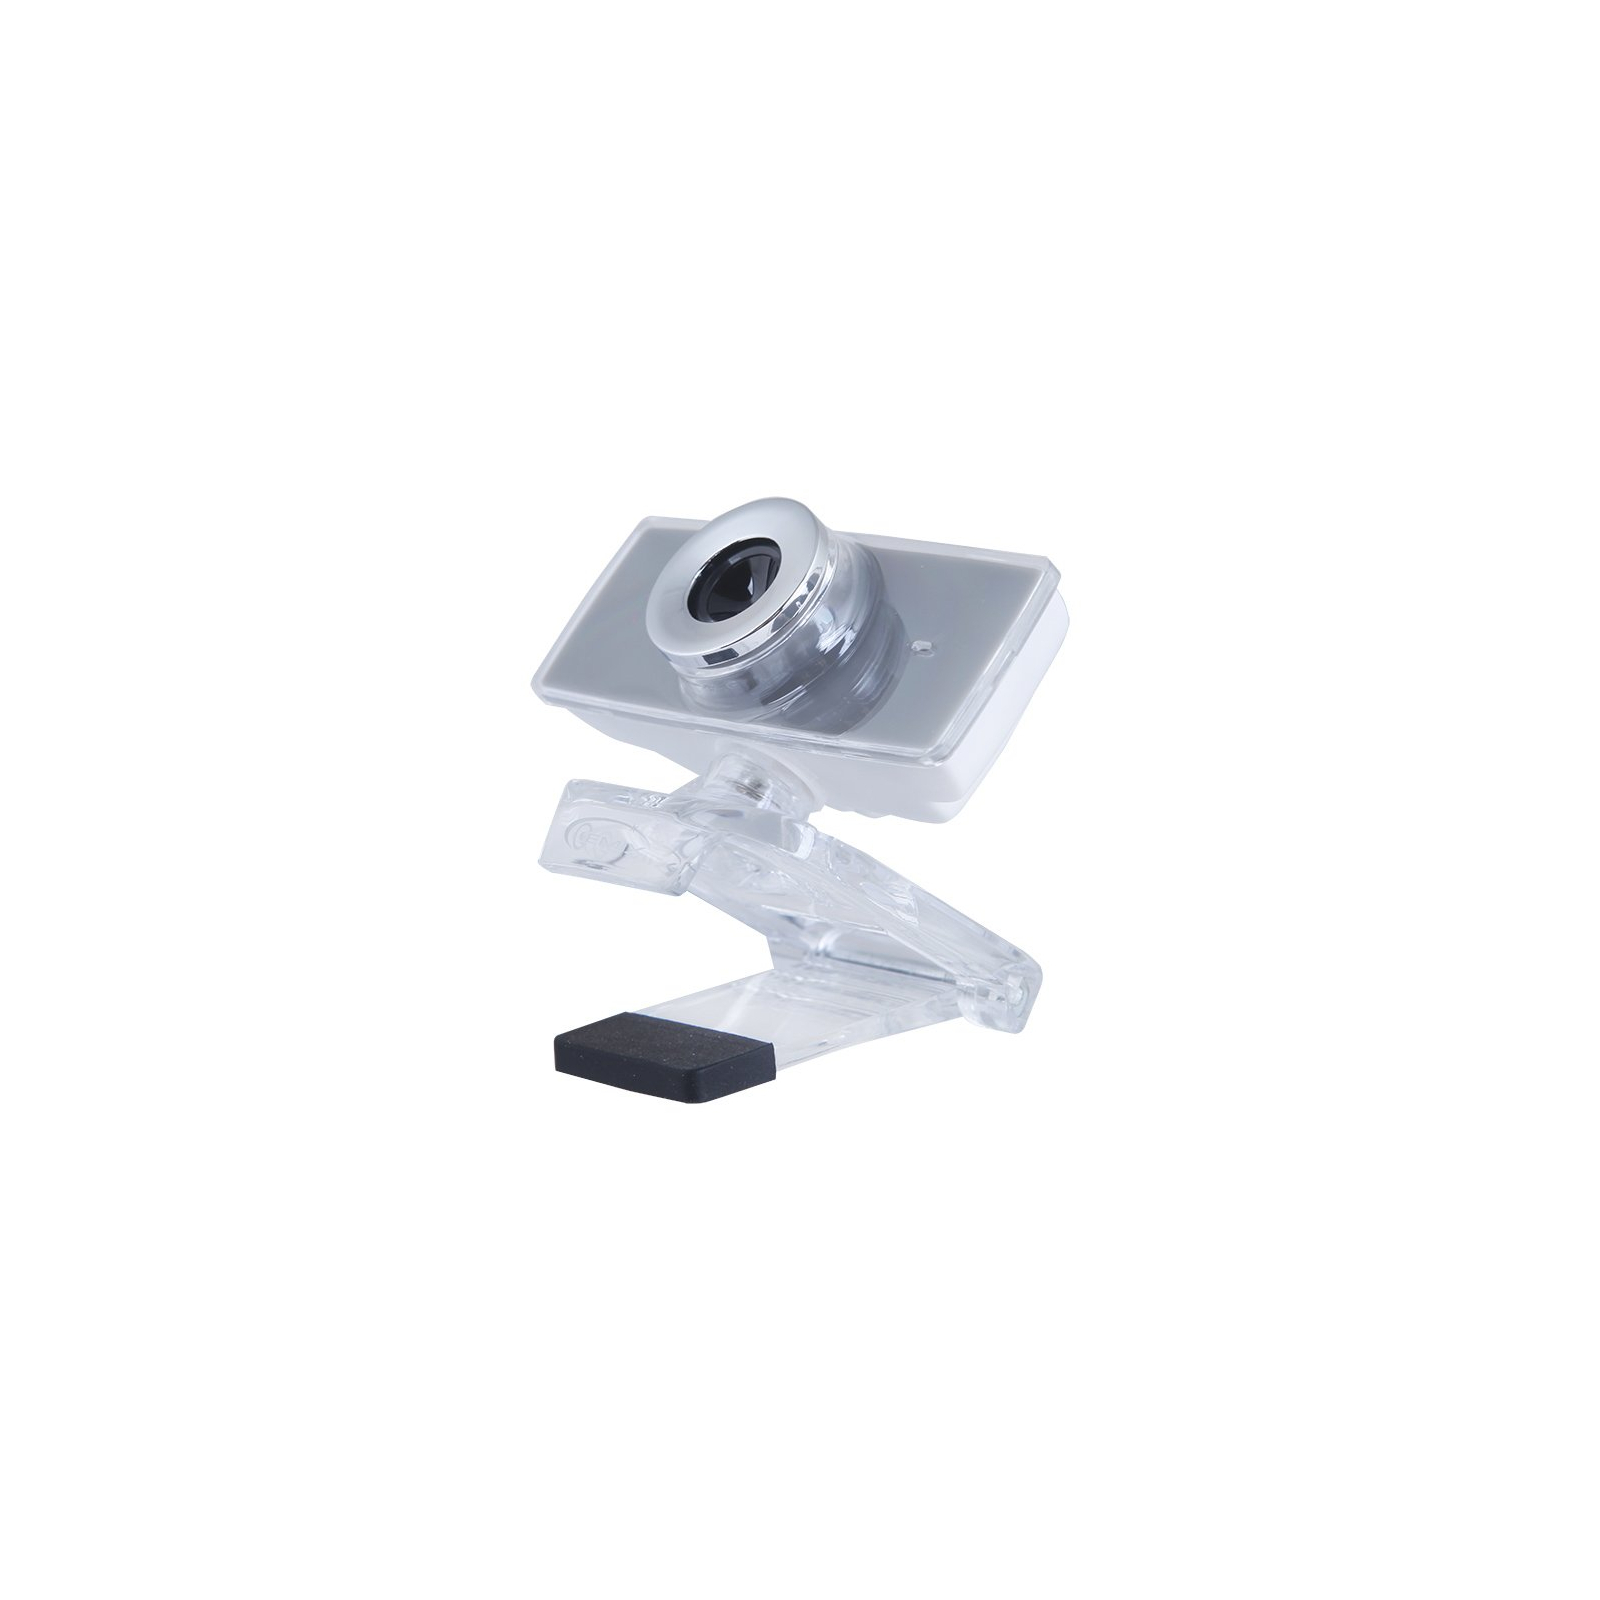 Веб-камера Gemix F9 white изображение 2